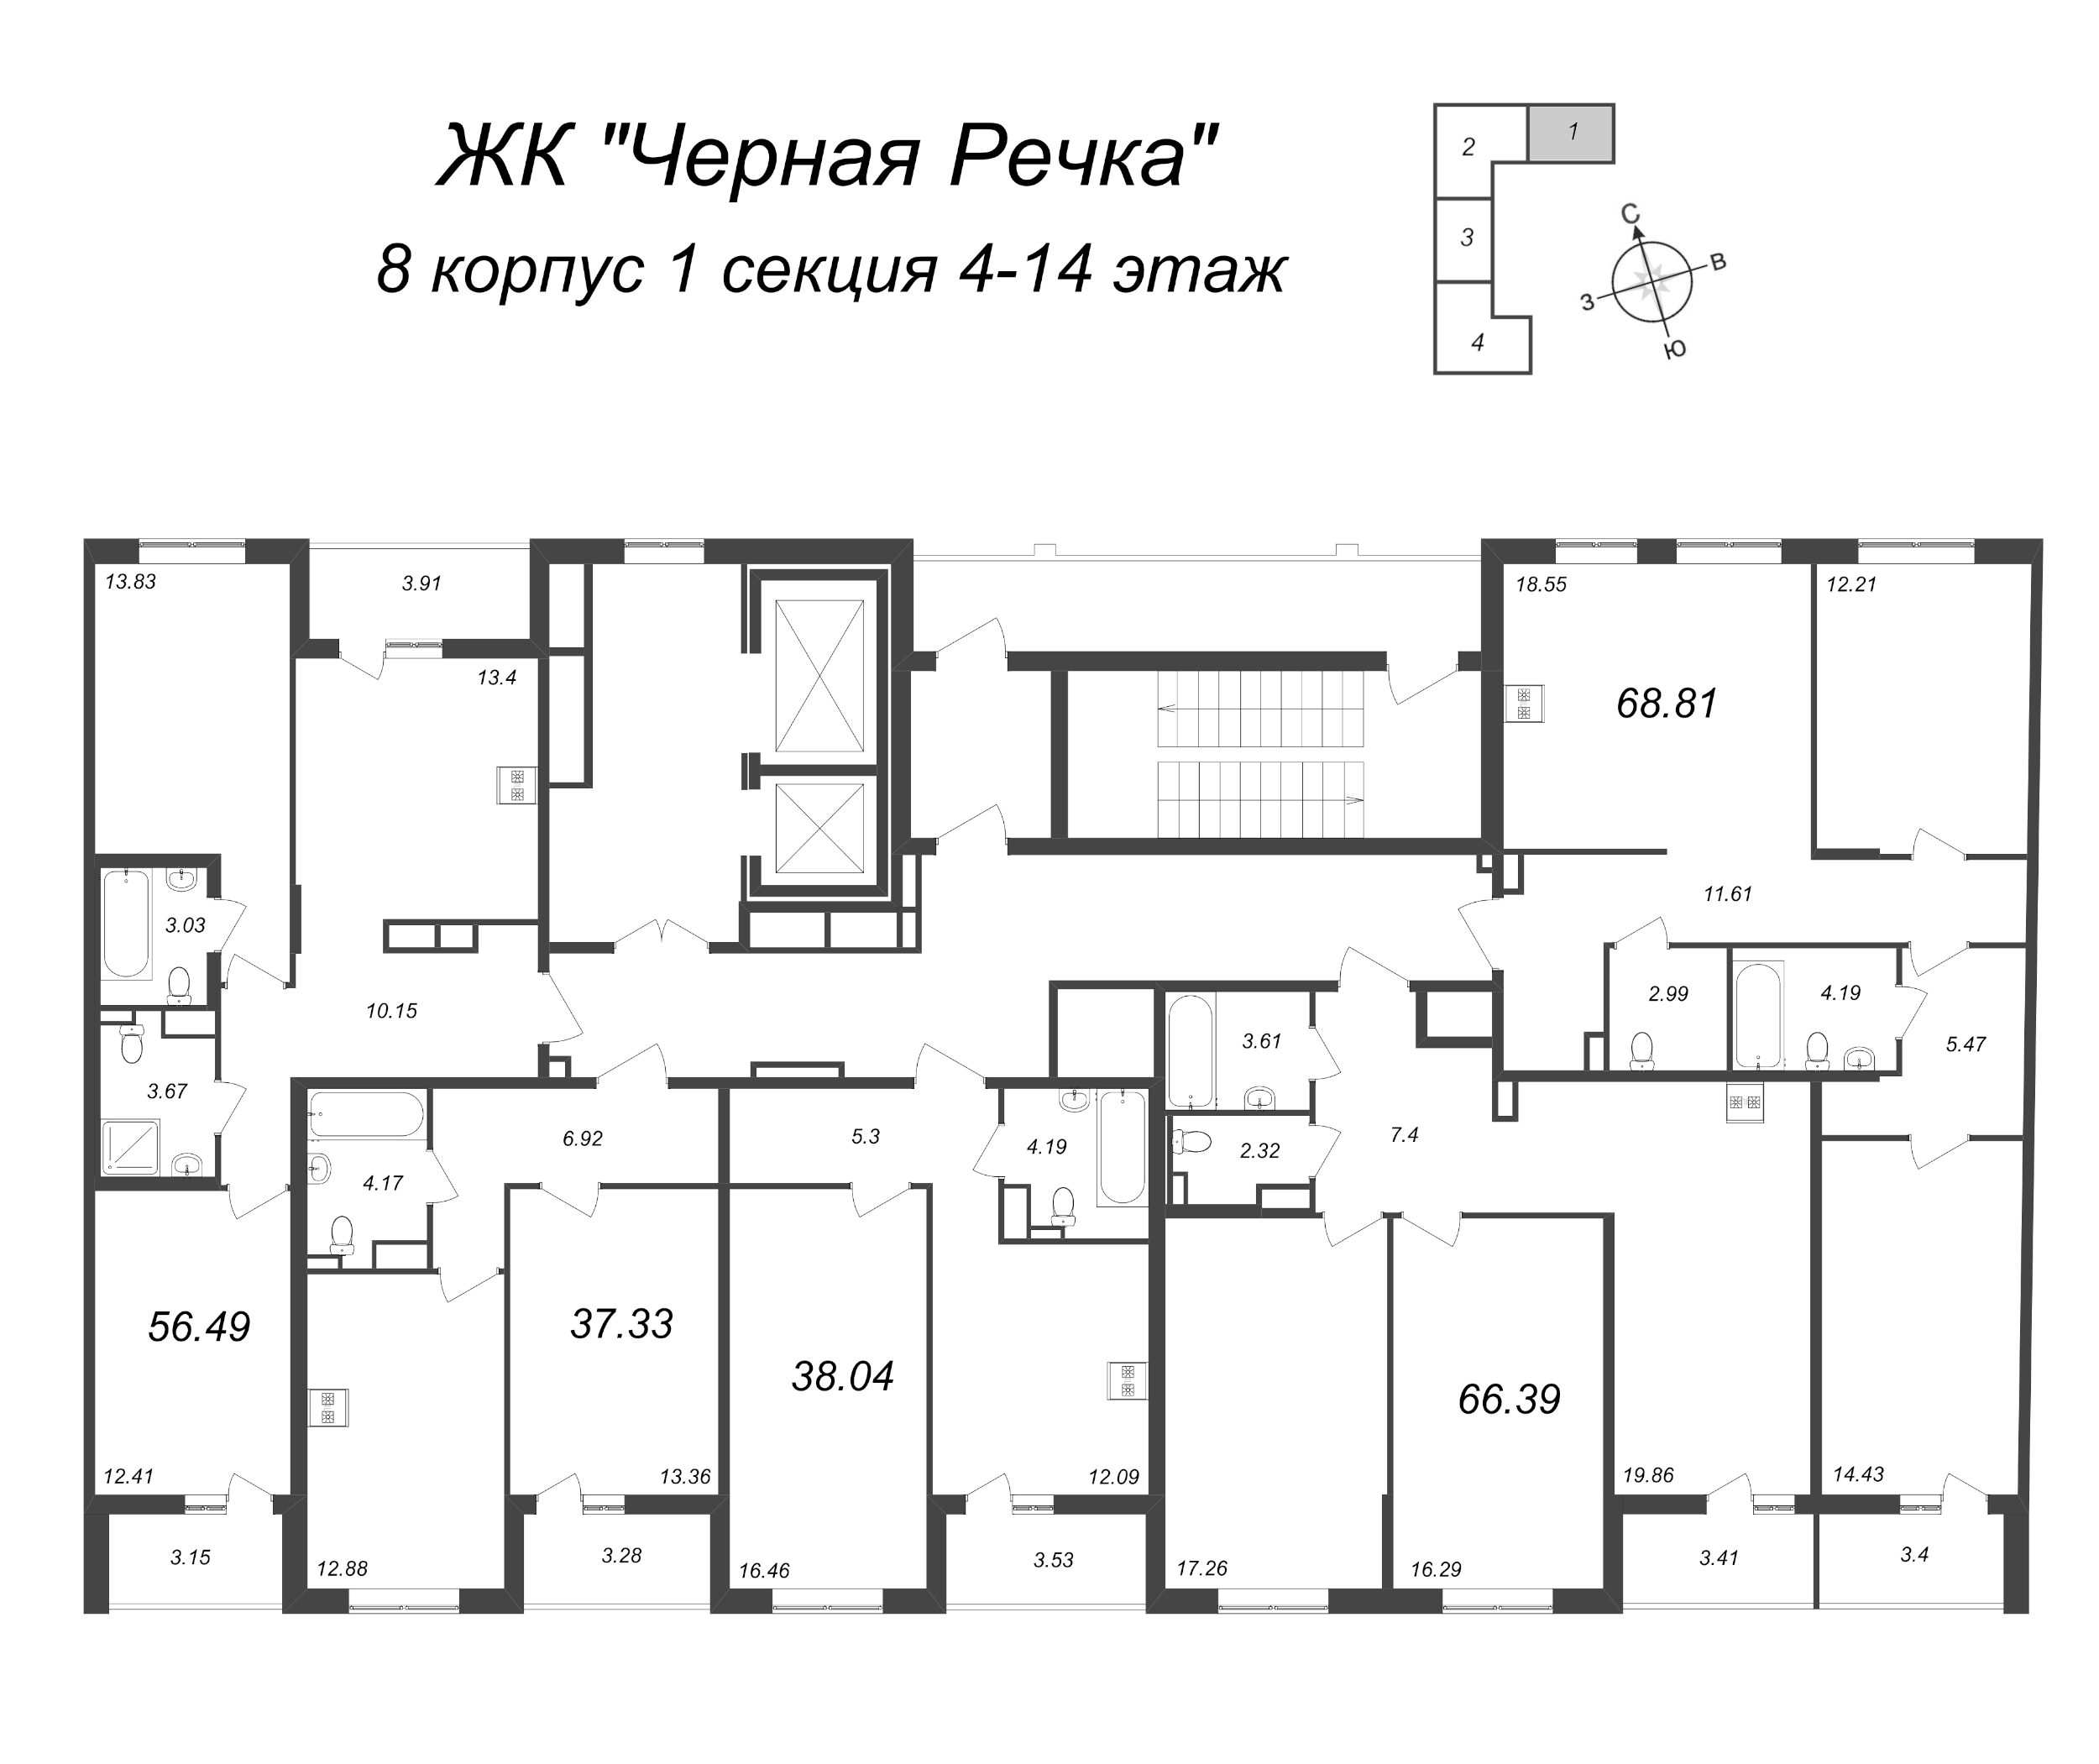 3-комнатная (Евро) квартира, 68.81 м² - планировка этажа